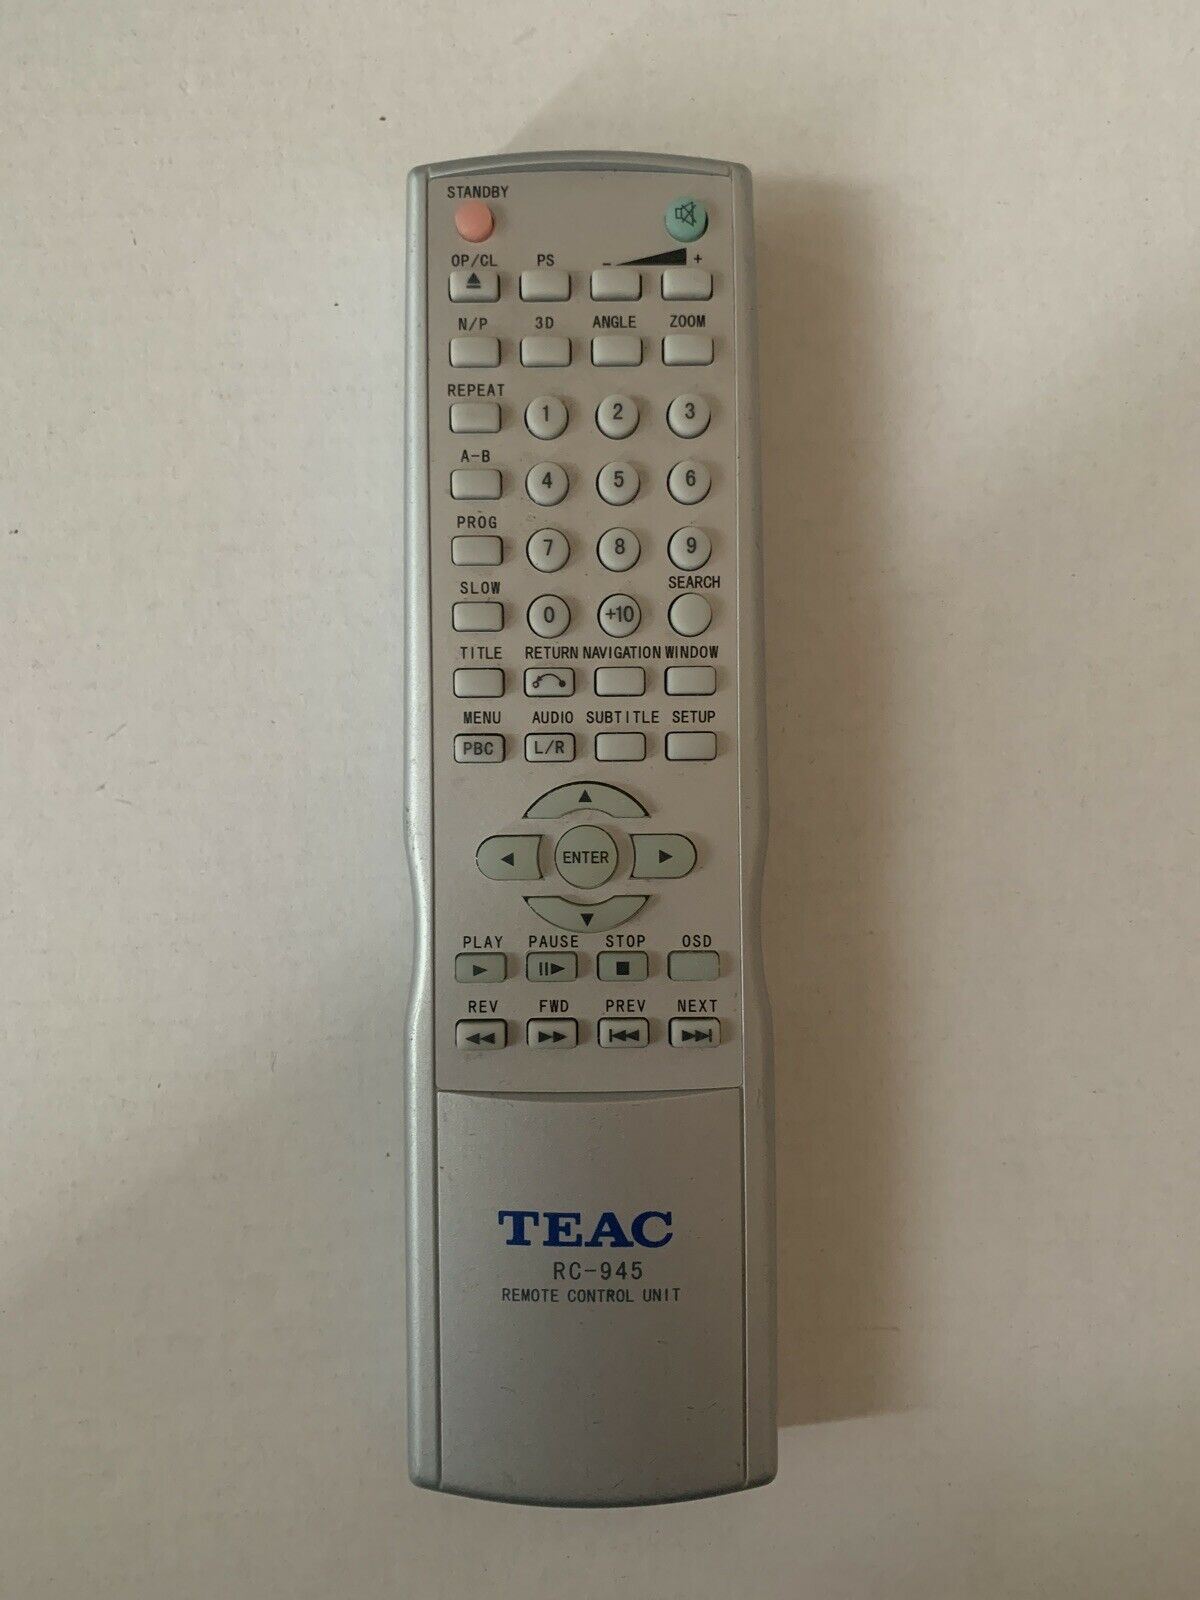 Genuine TEAC RC-945 Remote Control Unit